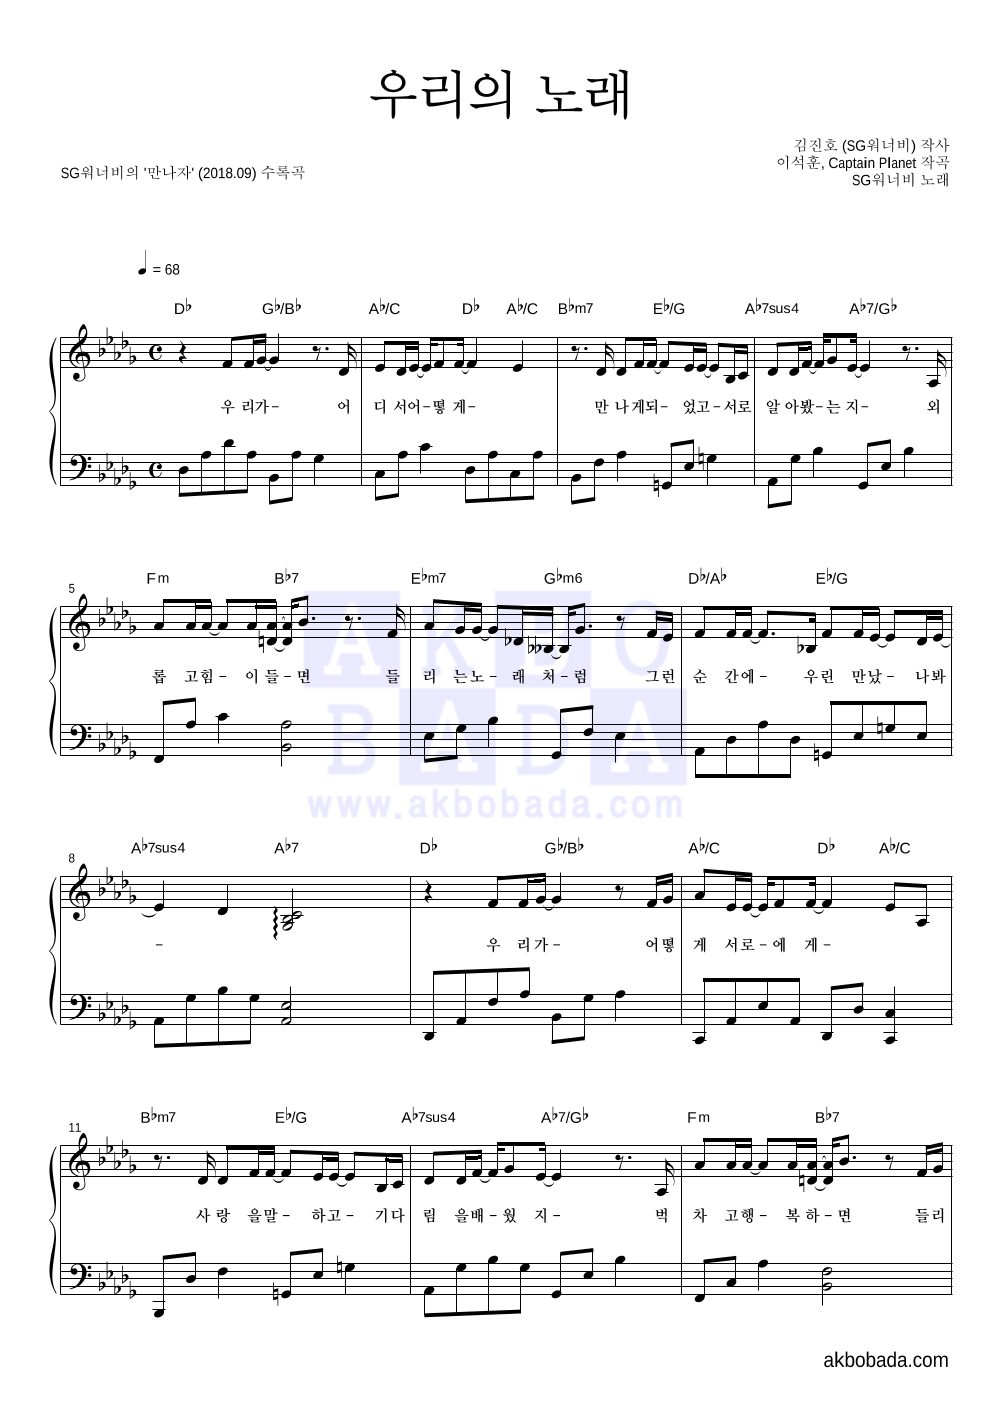 SG워너비 - 우리의 노래 피아노 2단 악보 